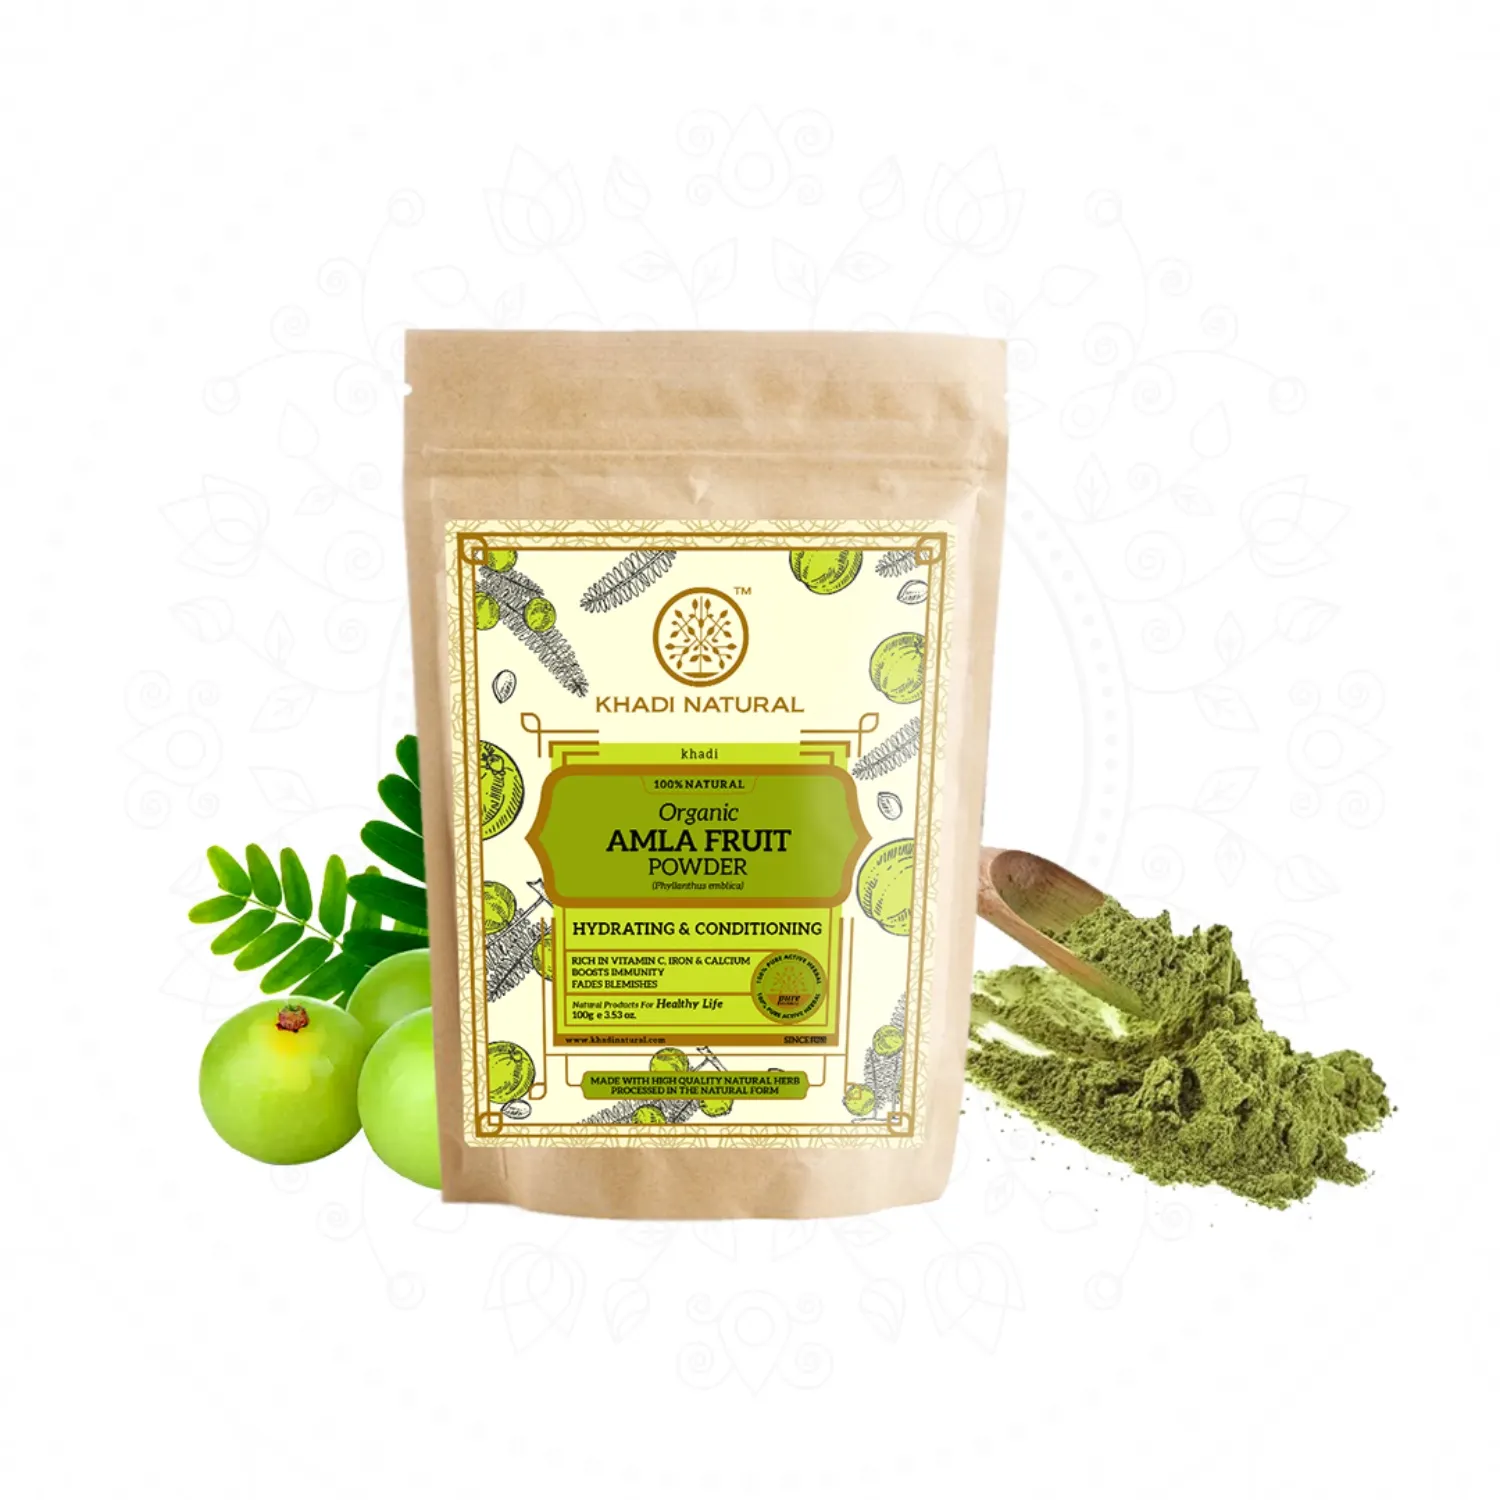 Khadi Natural Amla Fruit Organic Powder(100g) Prevents Hair Loss Premature Greying and Infections Best Hair Powder